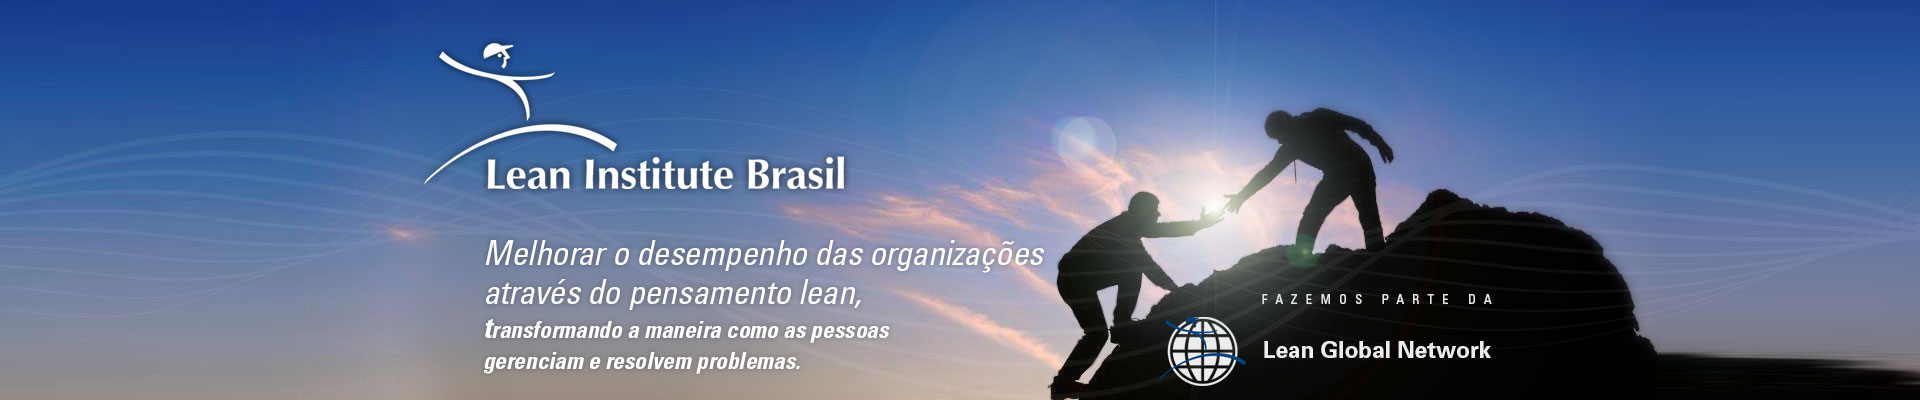 Nêio Mustafa - Banner para com a missão do Lean Institute Brasil